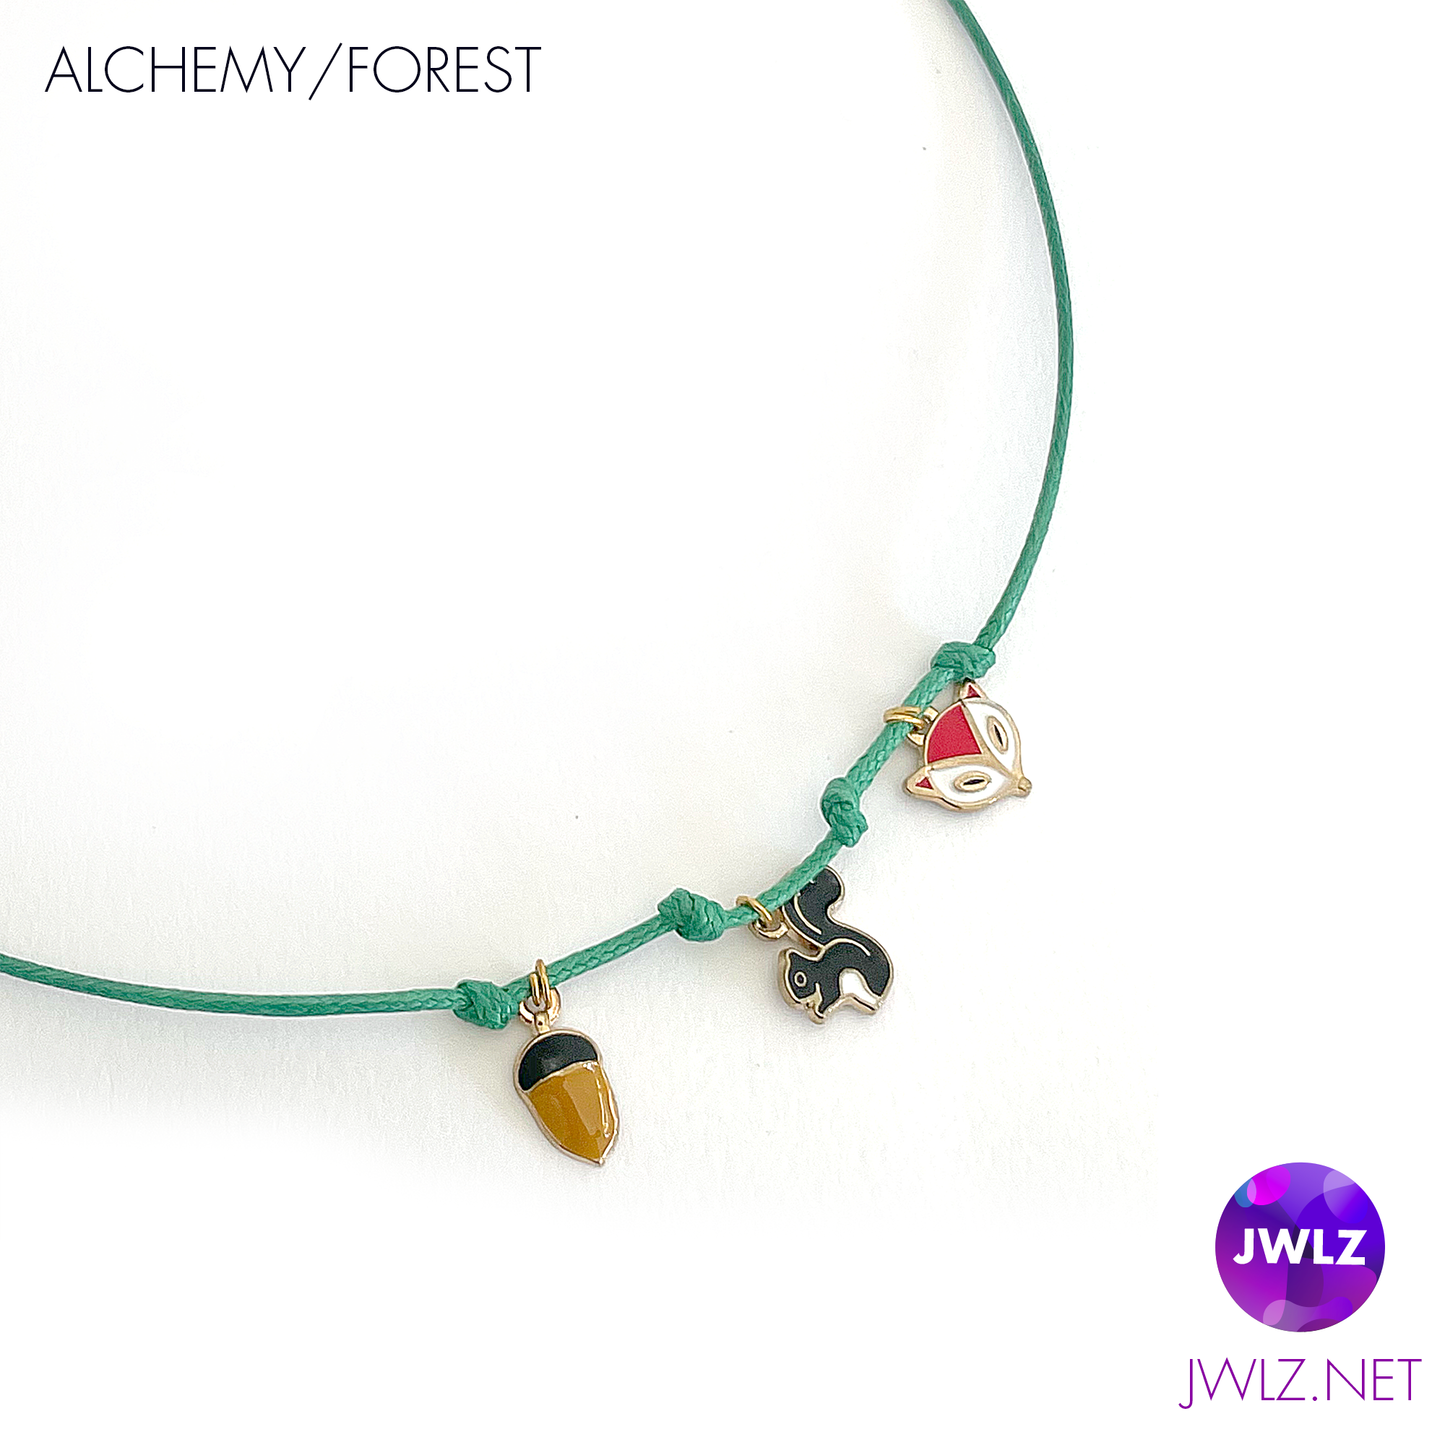 Alchemy / Forest